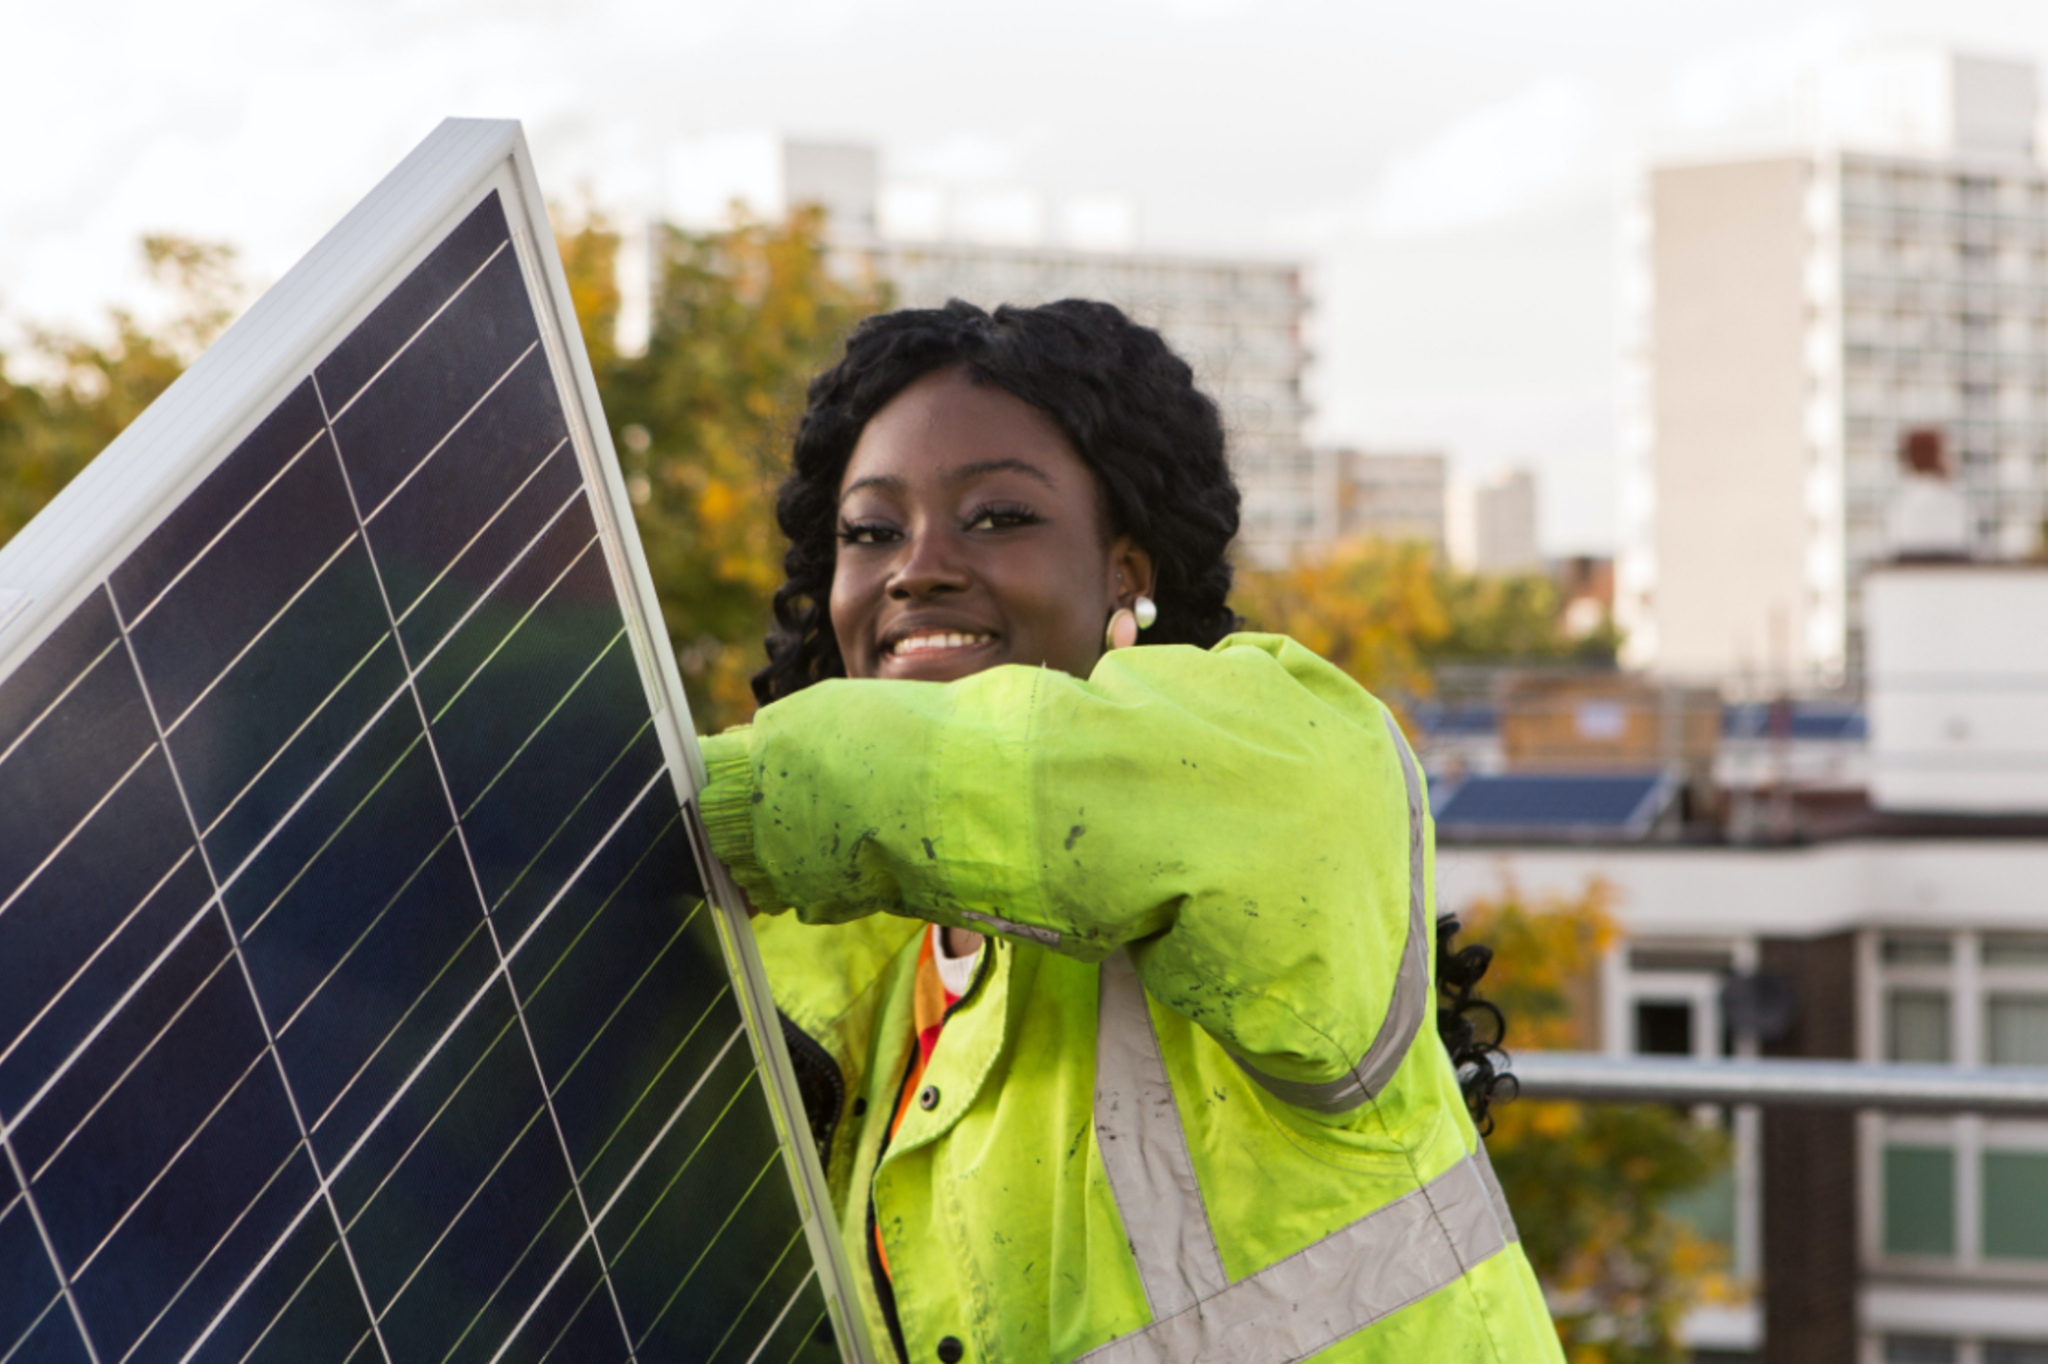 Woman in hi-viz jacket installing solar panel